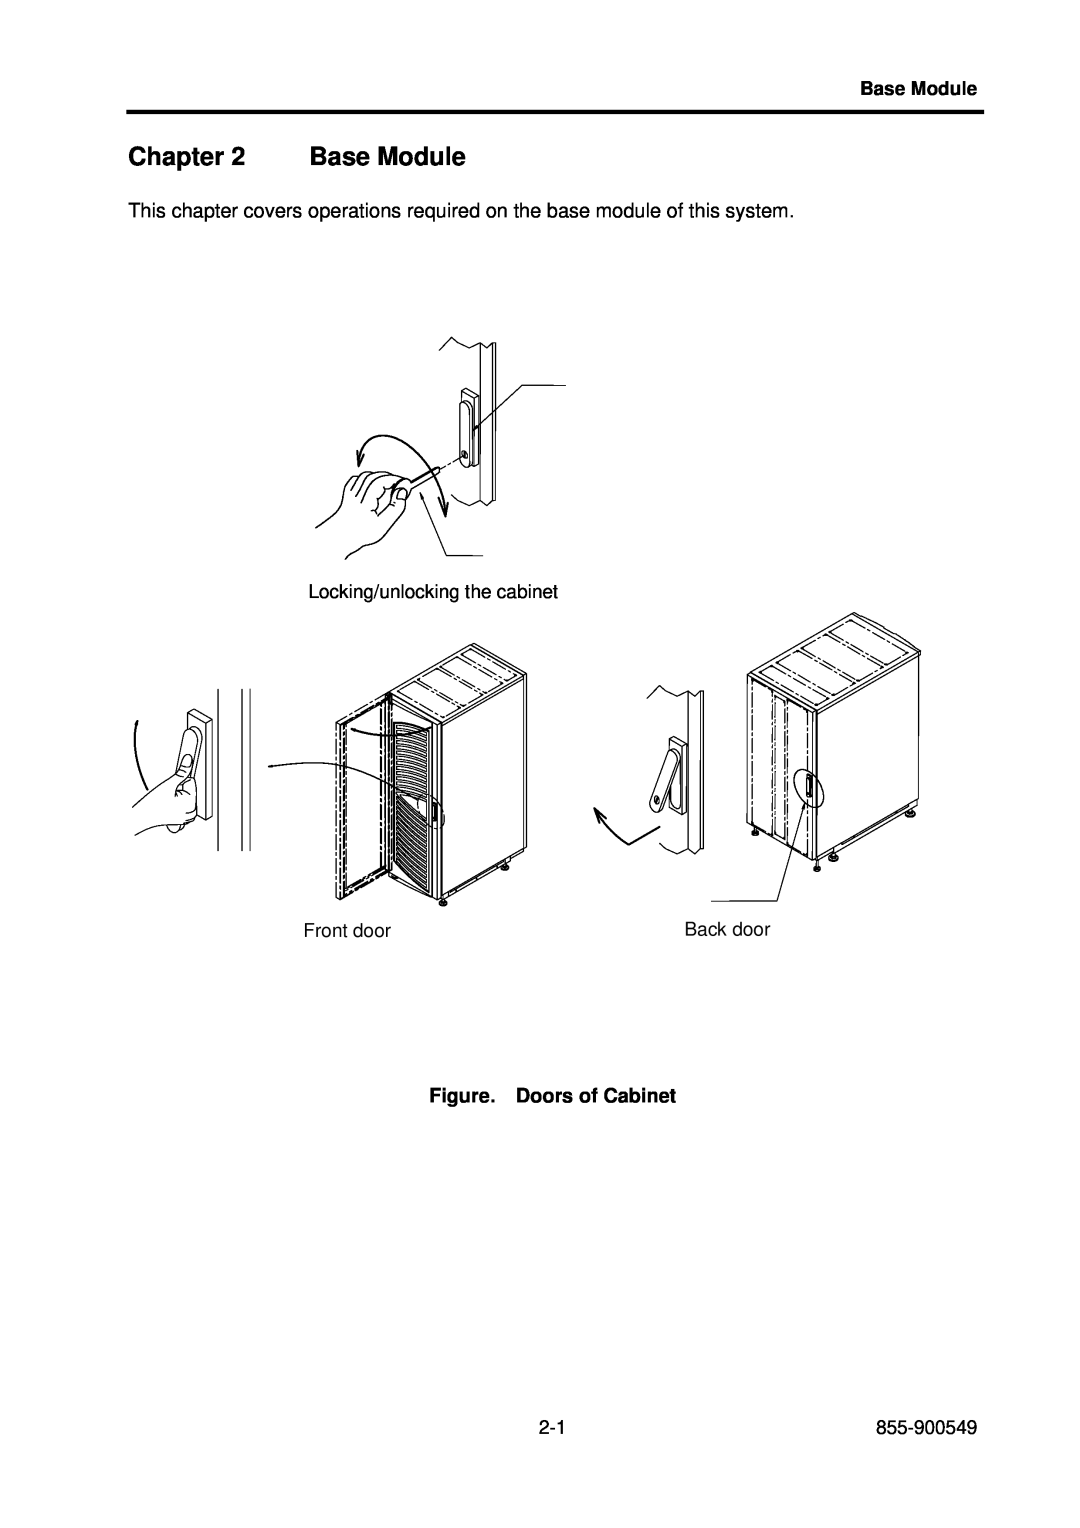 NEC 5020M-16, NX7700i operation manual Chapter, Base Module, Figure. Doors of Cabinet 